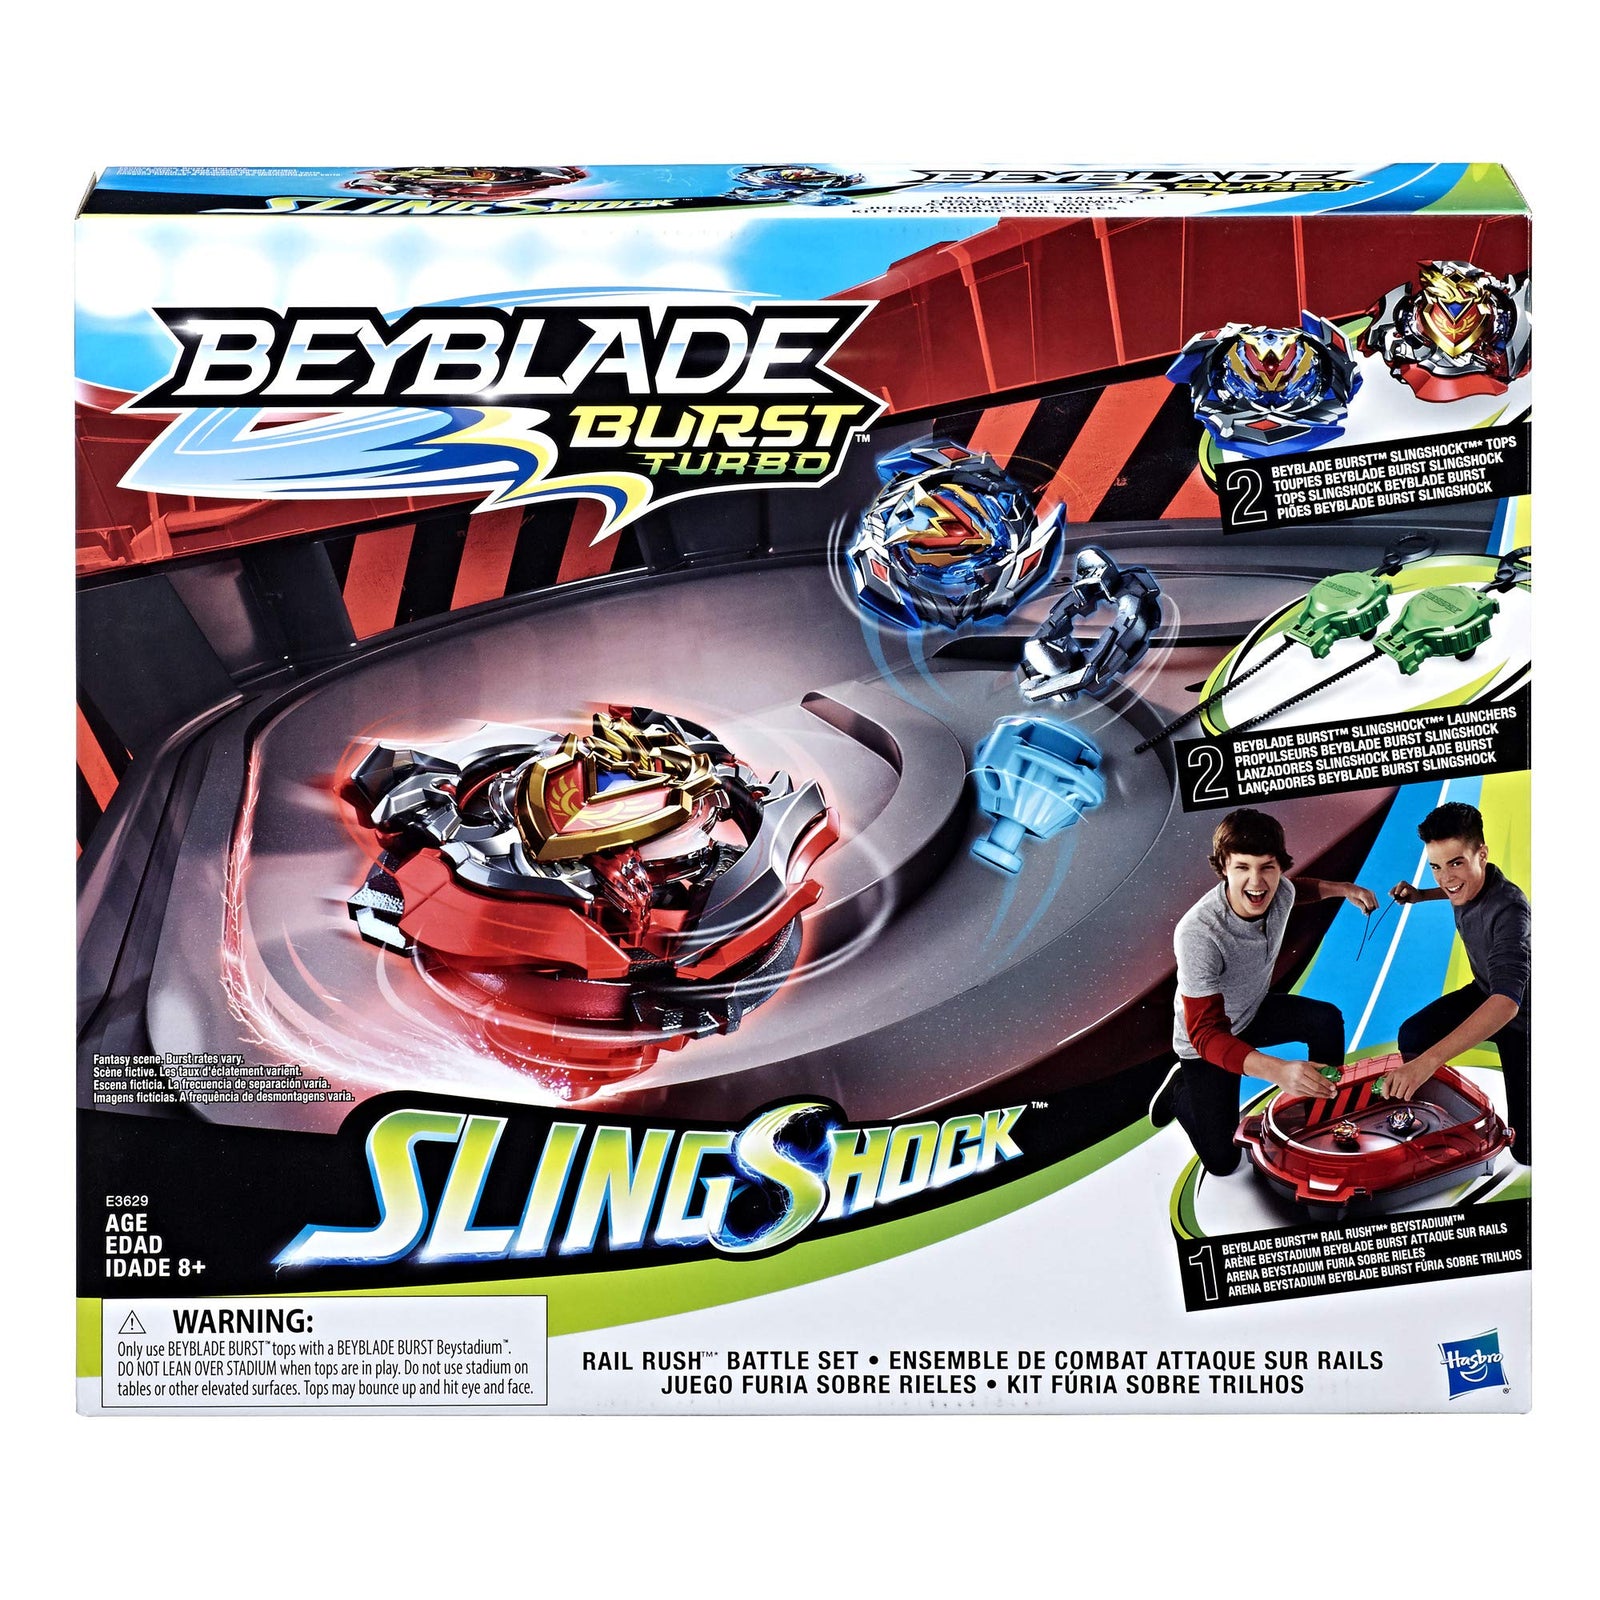 Beyblade Burst Turbo Slingshock Rail Rush Battle Set -- Complete Set with Beyblade Burst Beystadium, Battling Tops, and Launchers (Amazon Exclusive)